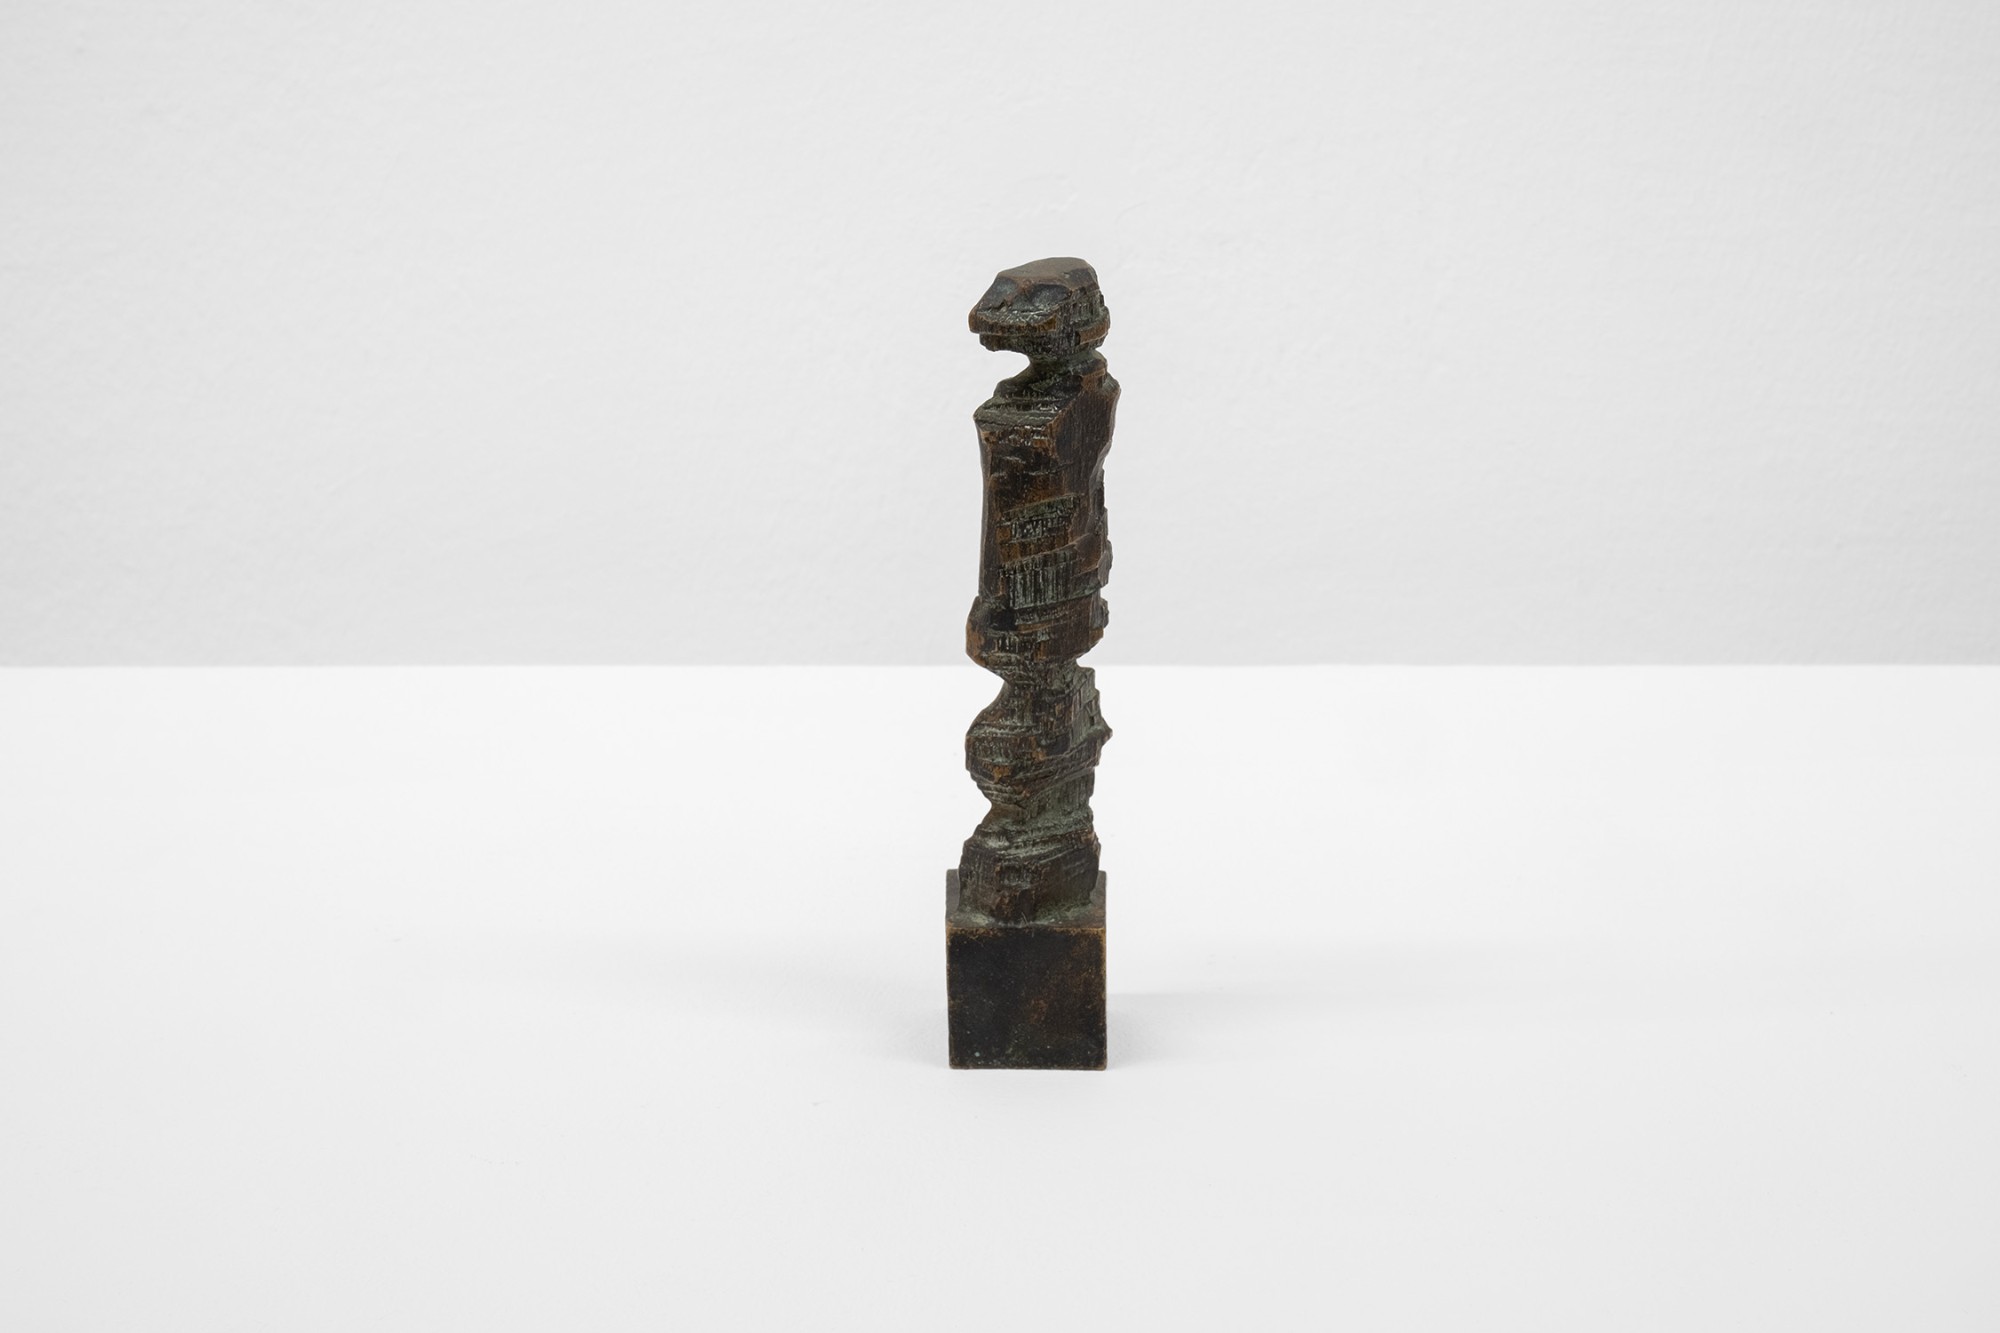 A.R. Penck, Adler und Kopf, 1985, Bronze, 4-12, 18 x 4 x 4 cm